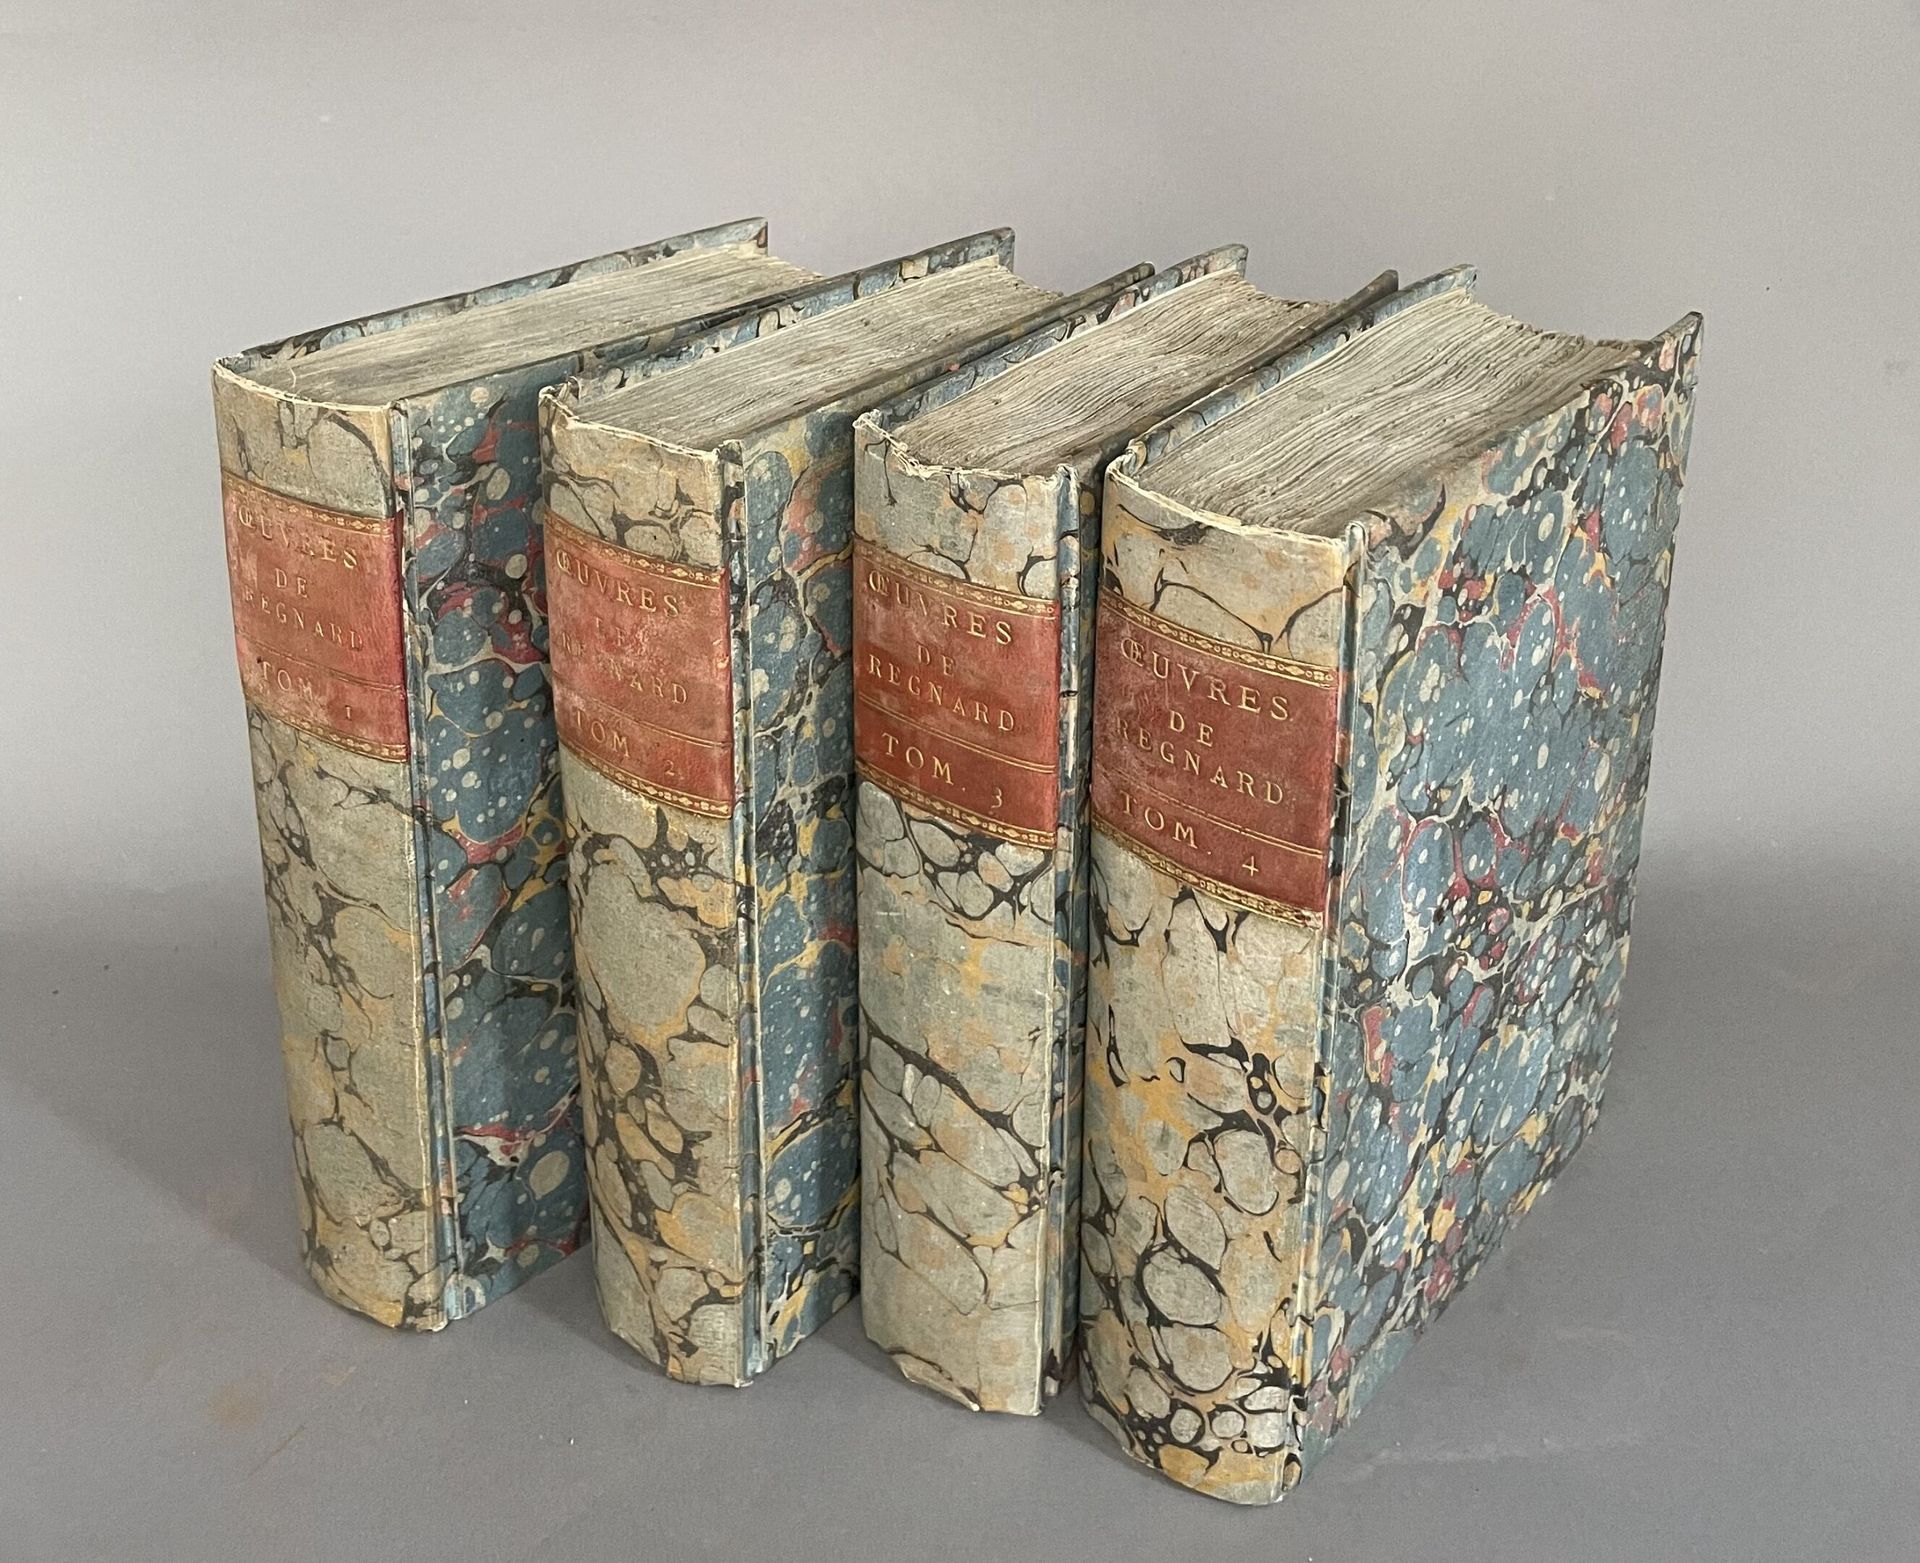 Null REGNARD Jean-François. Works. Paris. Maradan. 1790. 4 volumes in-8.

In the&hellip;